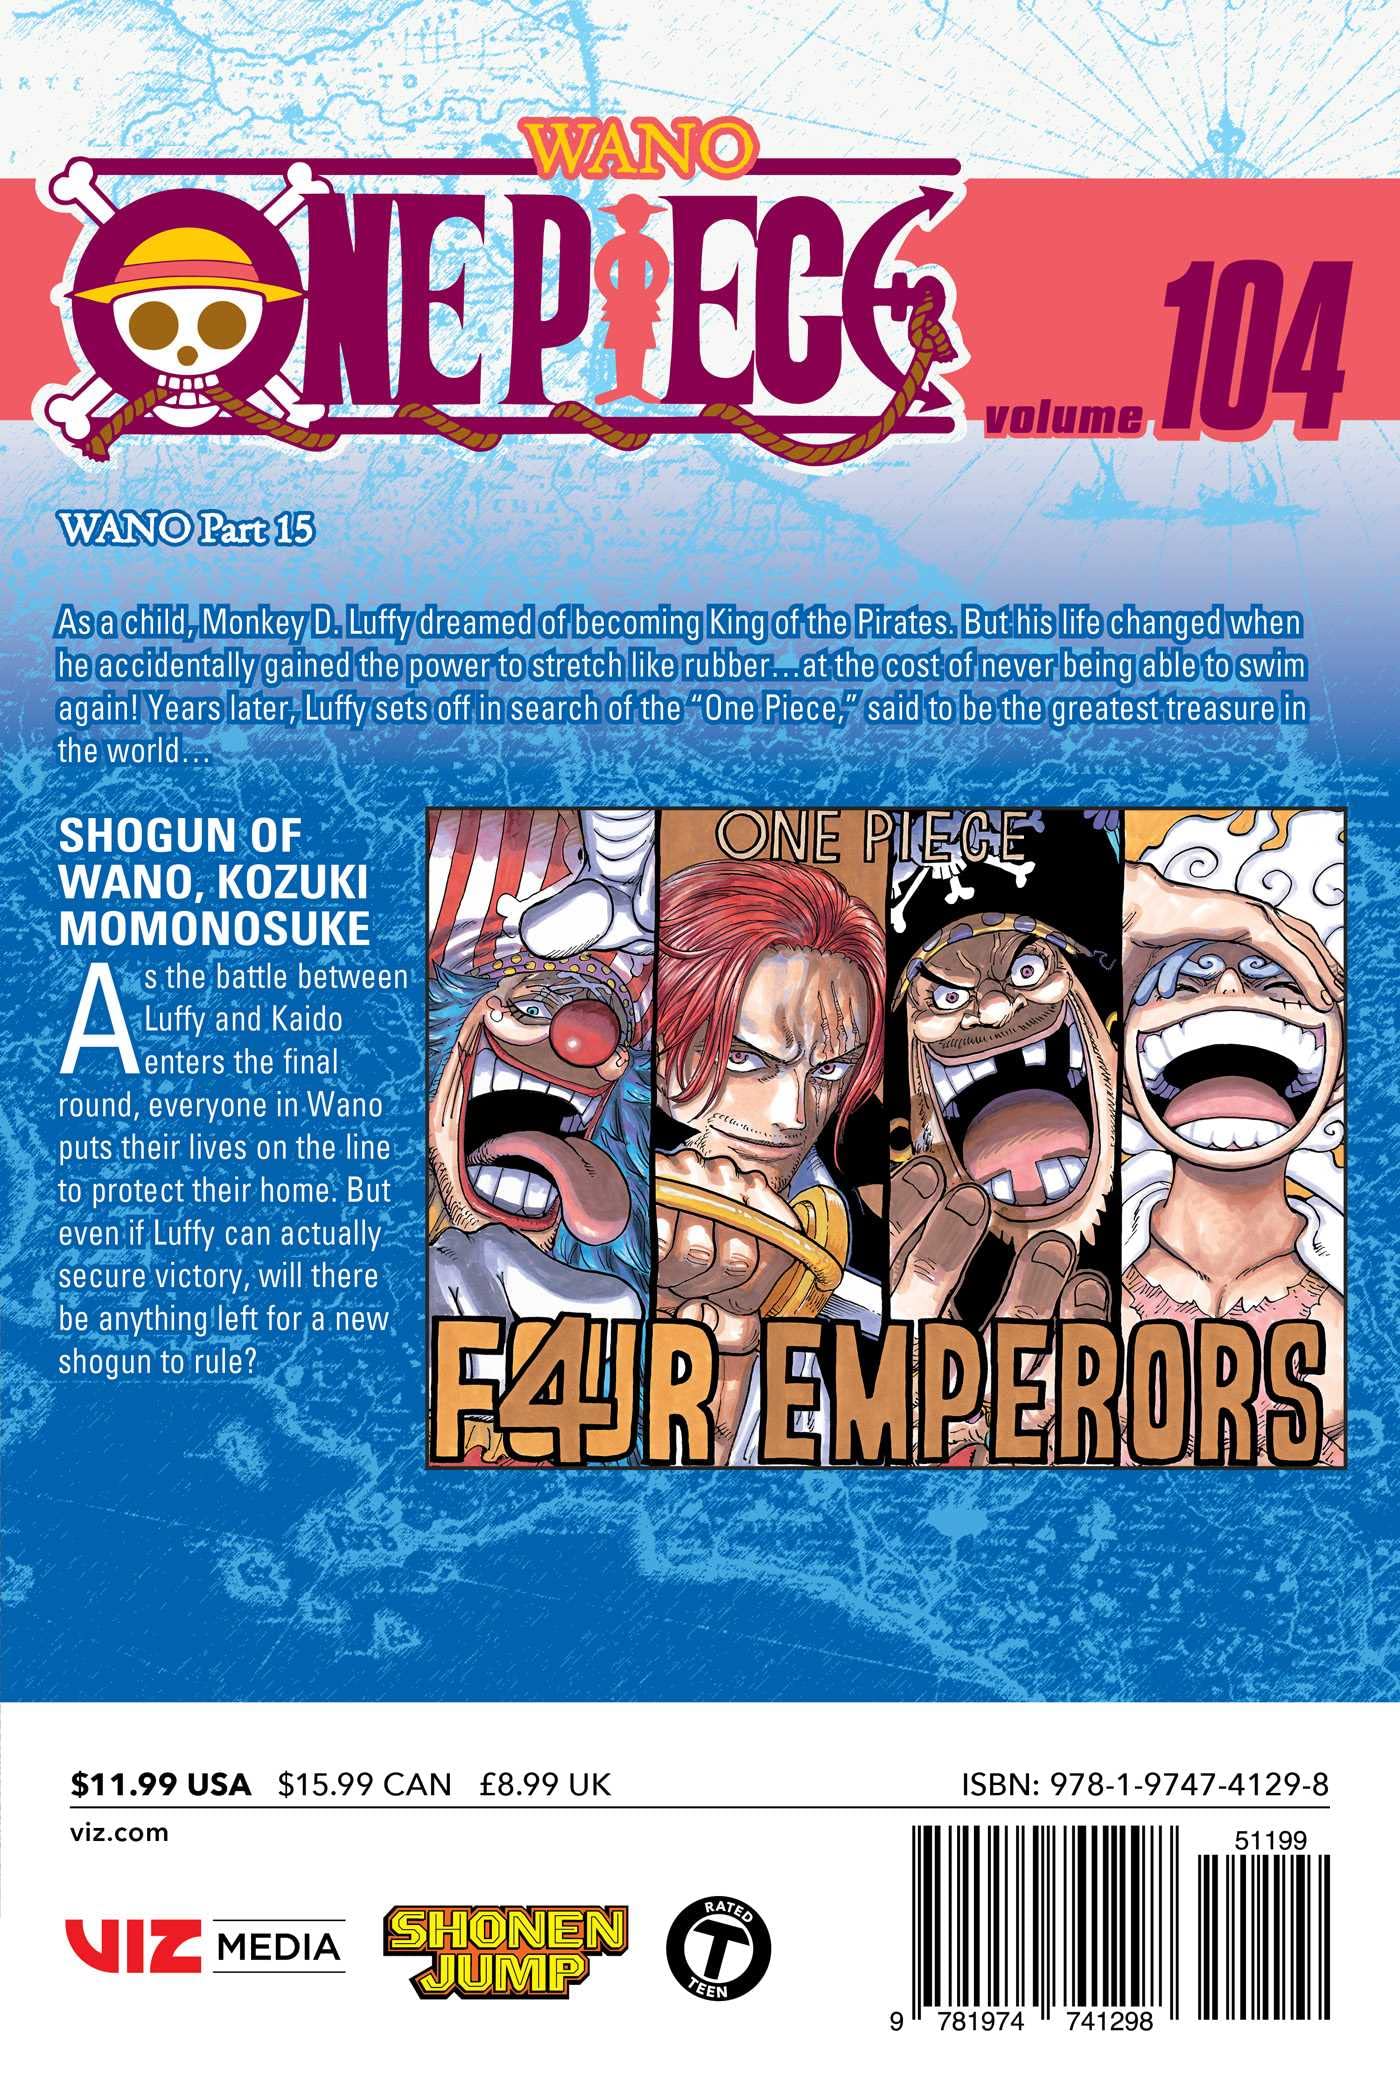 One Piece, Vol. 104 (104)